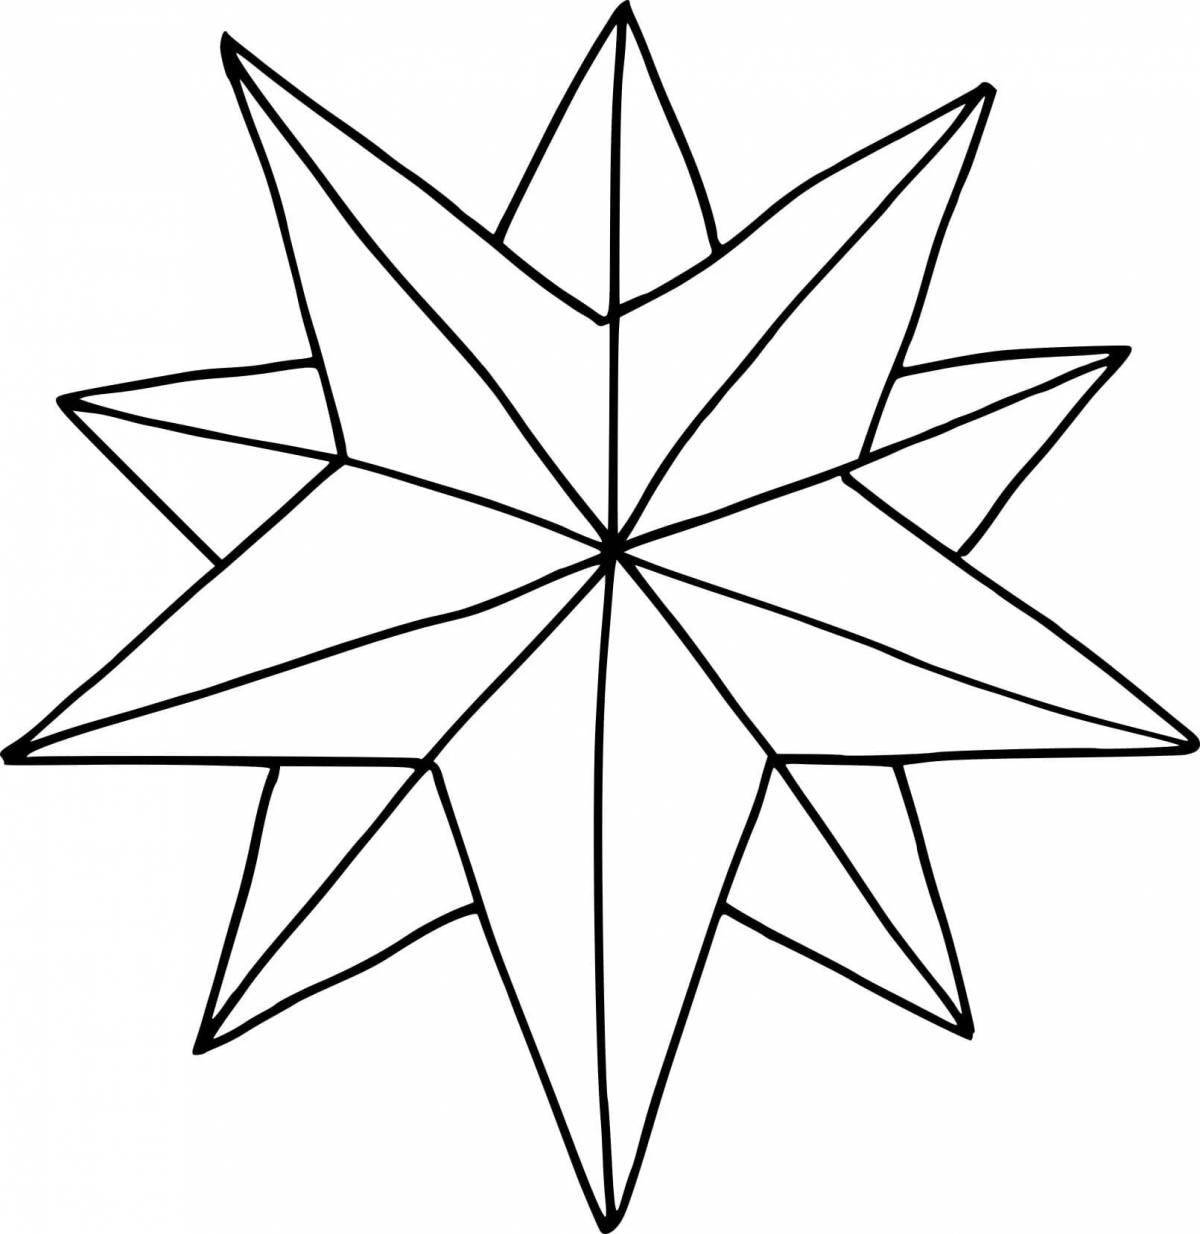 Star of Bethlehem #15